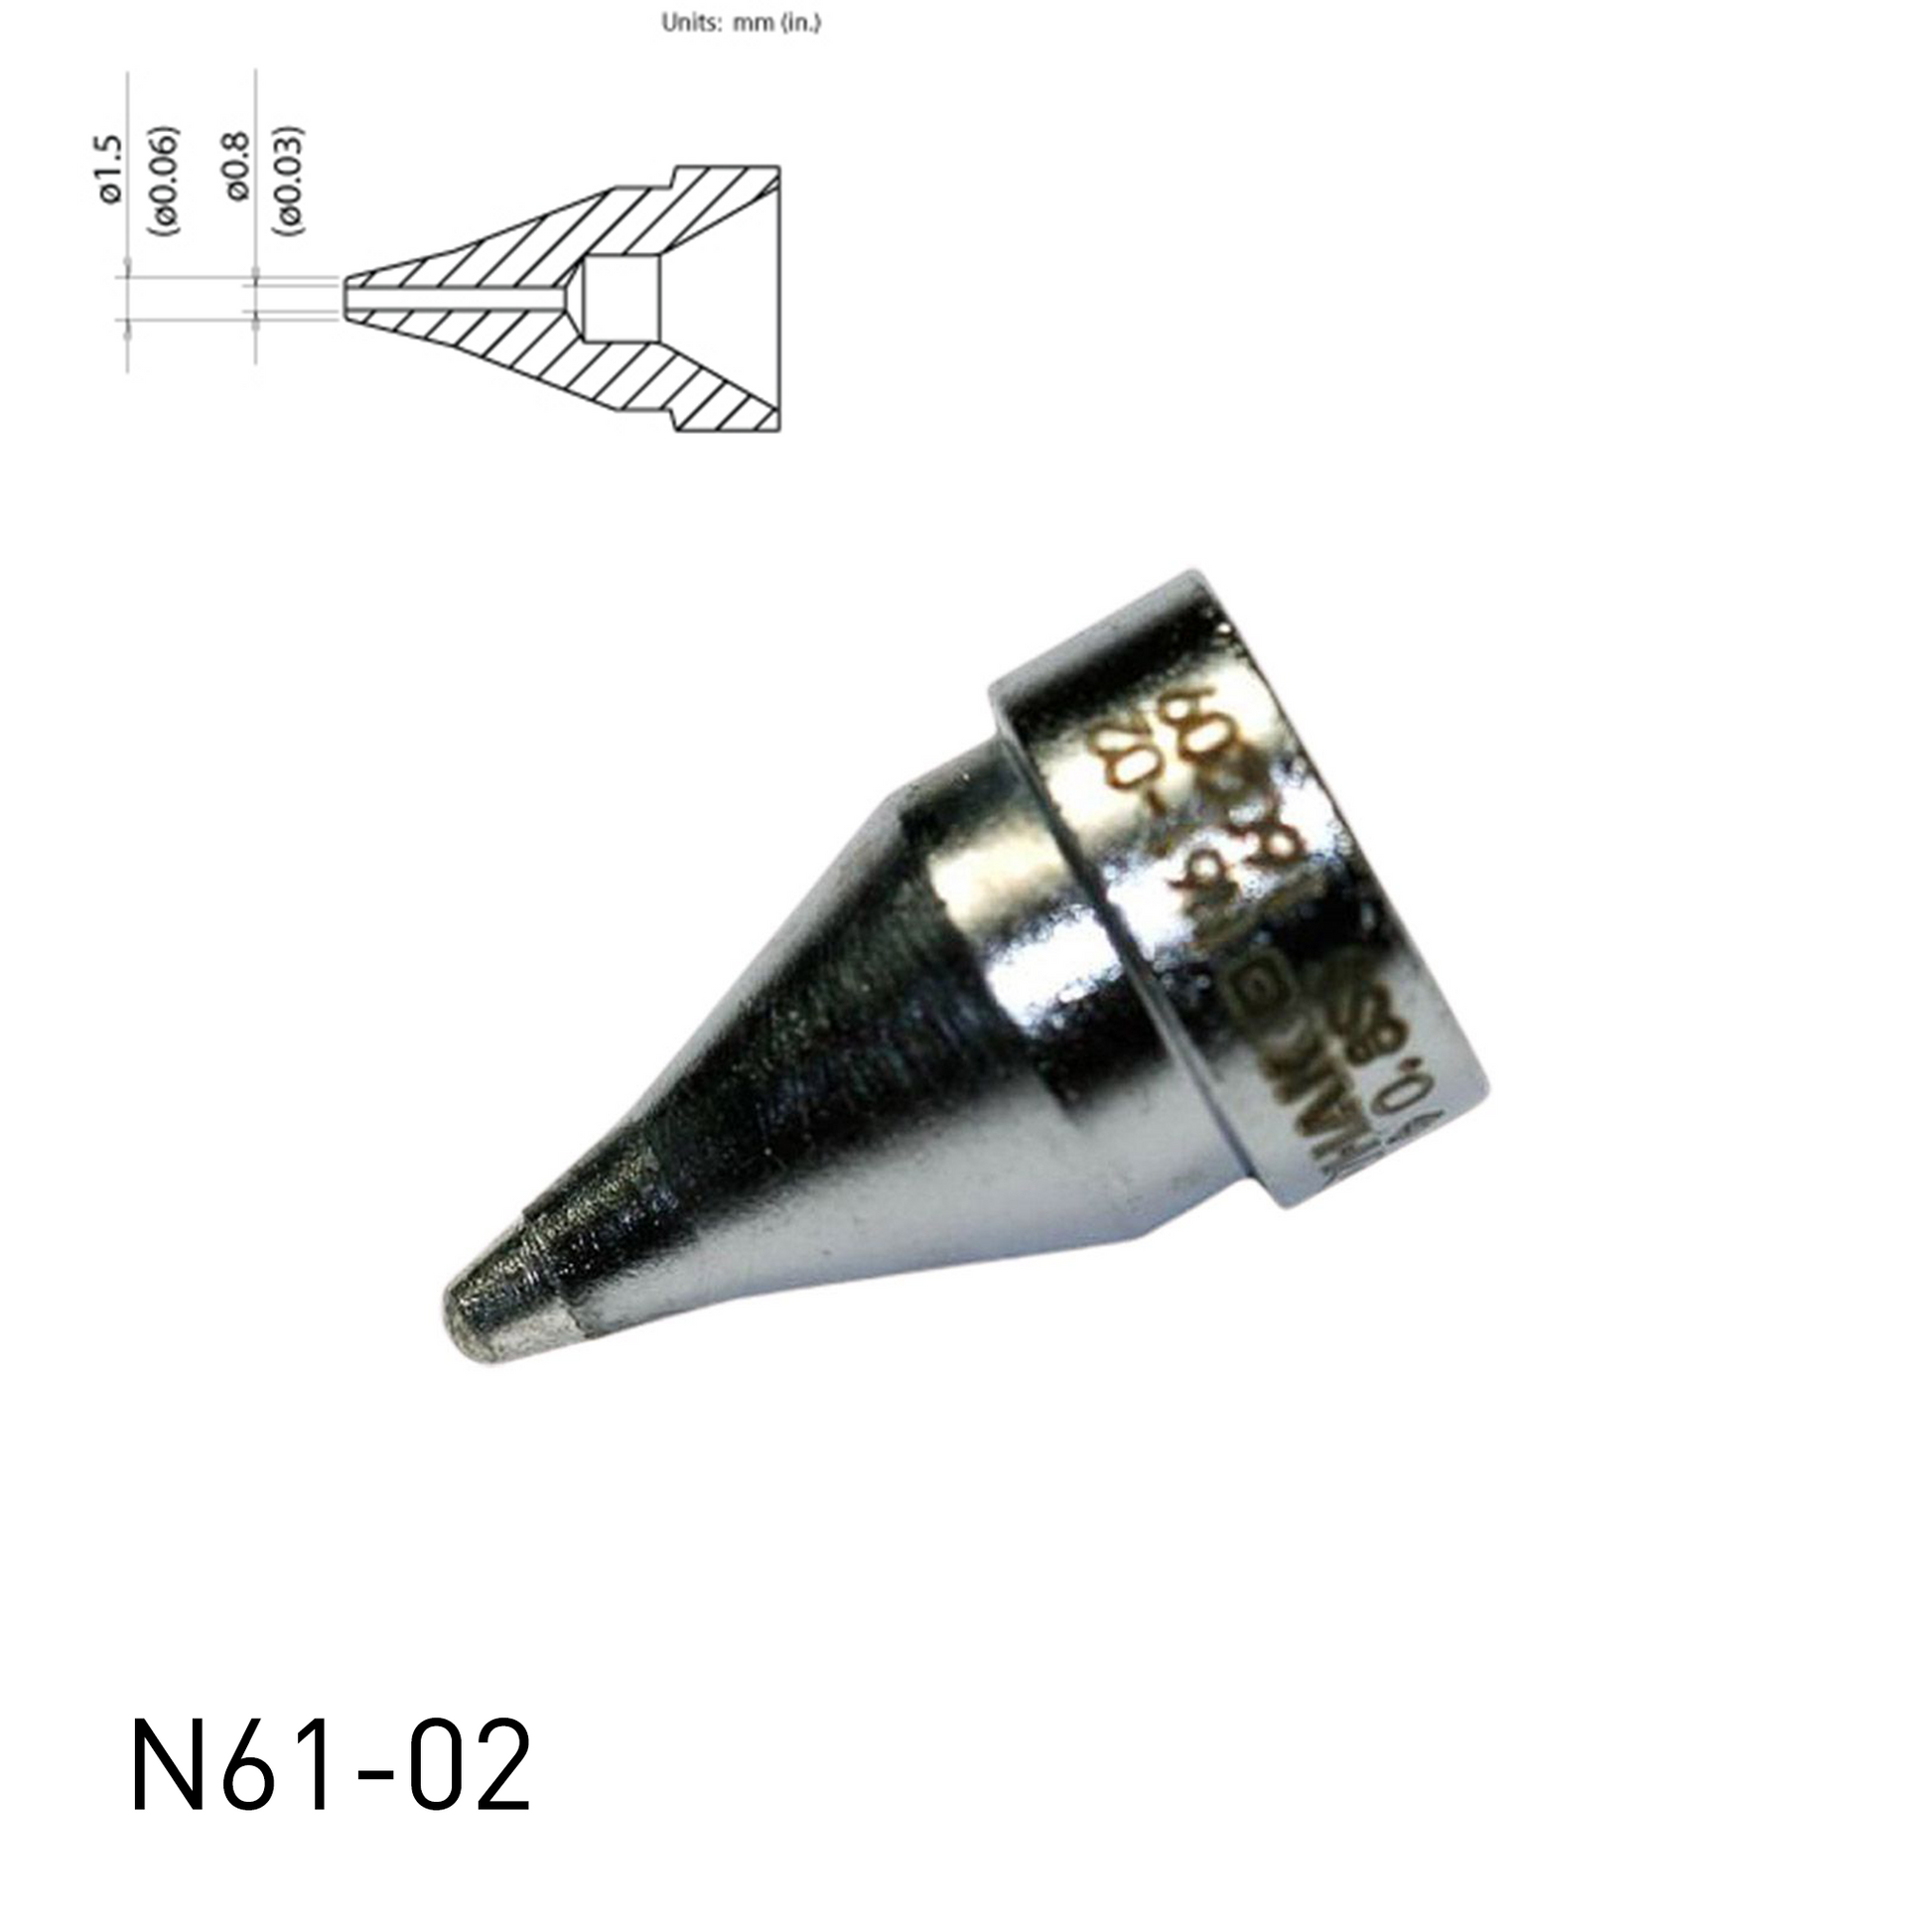 Hakko Products Pte Ltd_ N61-02 Desoldering Nozzle_ Nozzles_ Hakko Products